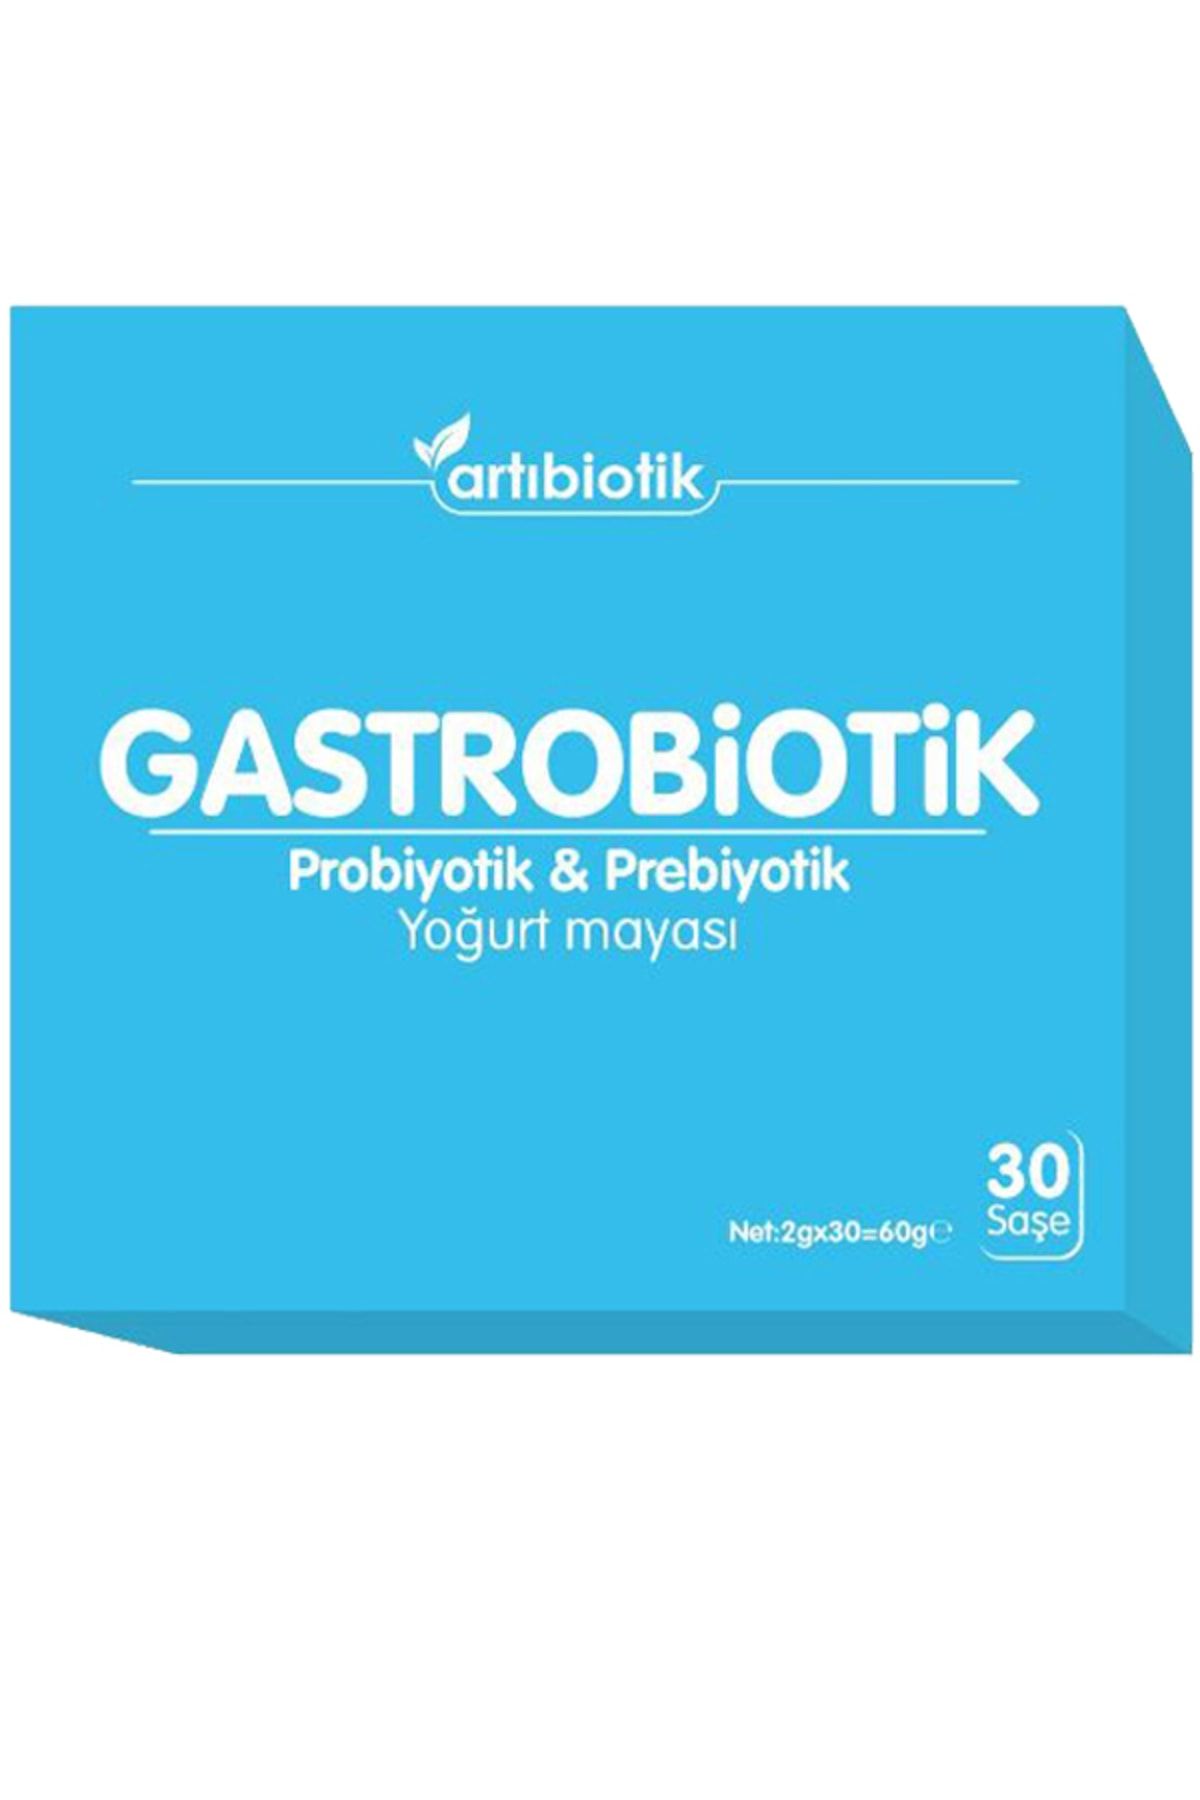 Artıbiotik Doğadan Bizim Gastrobiotik Probiotik & Prebiotik Yoğurt Mayası 2gr X 30 Saşe